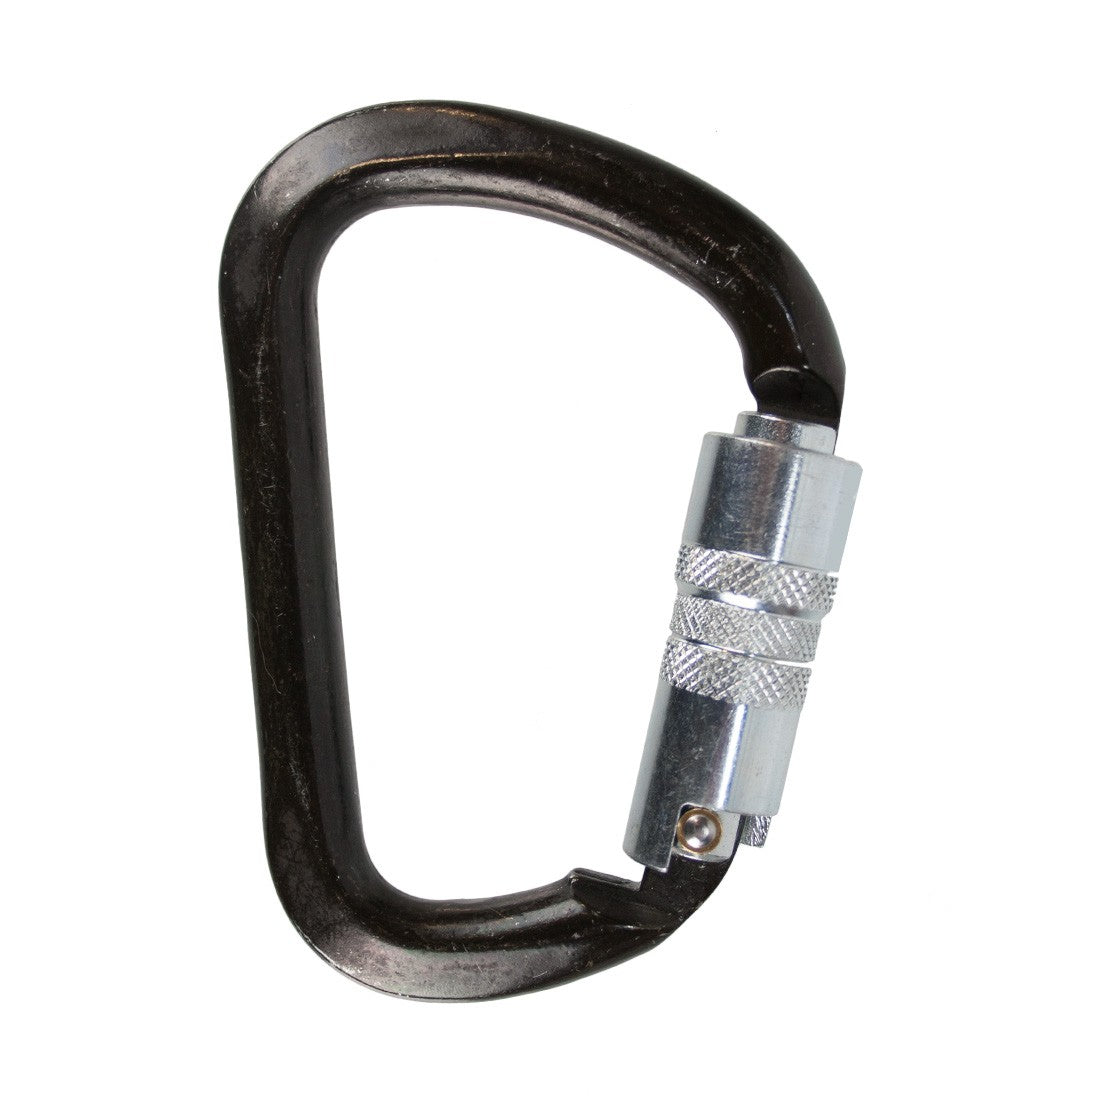 KONG ANSI Steel Carabiner Twist Lock - Extra Large - Left Side View